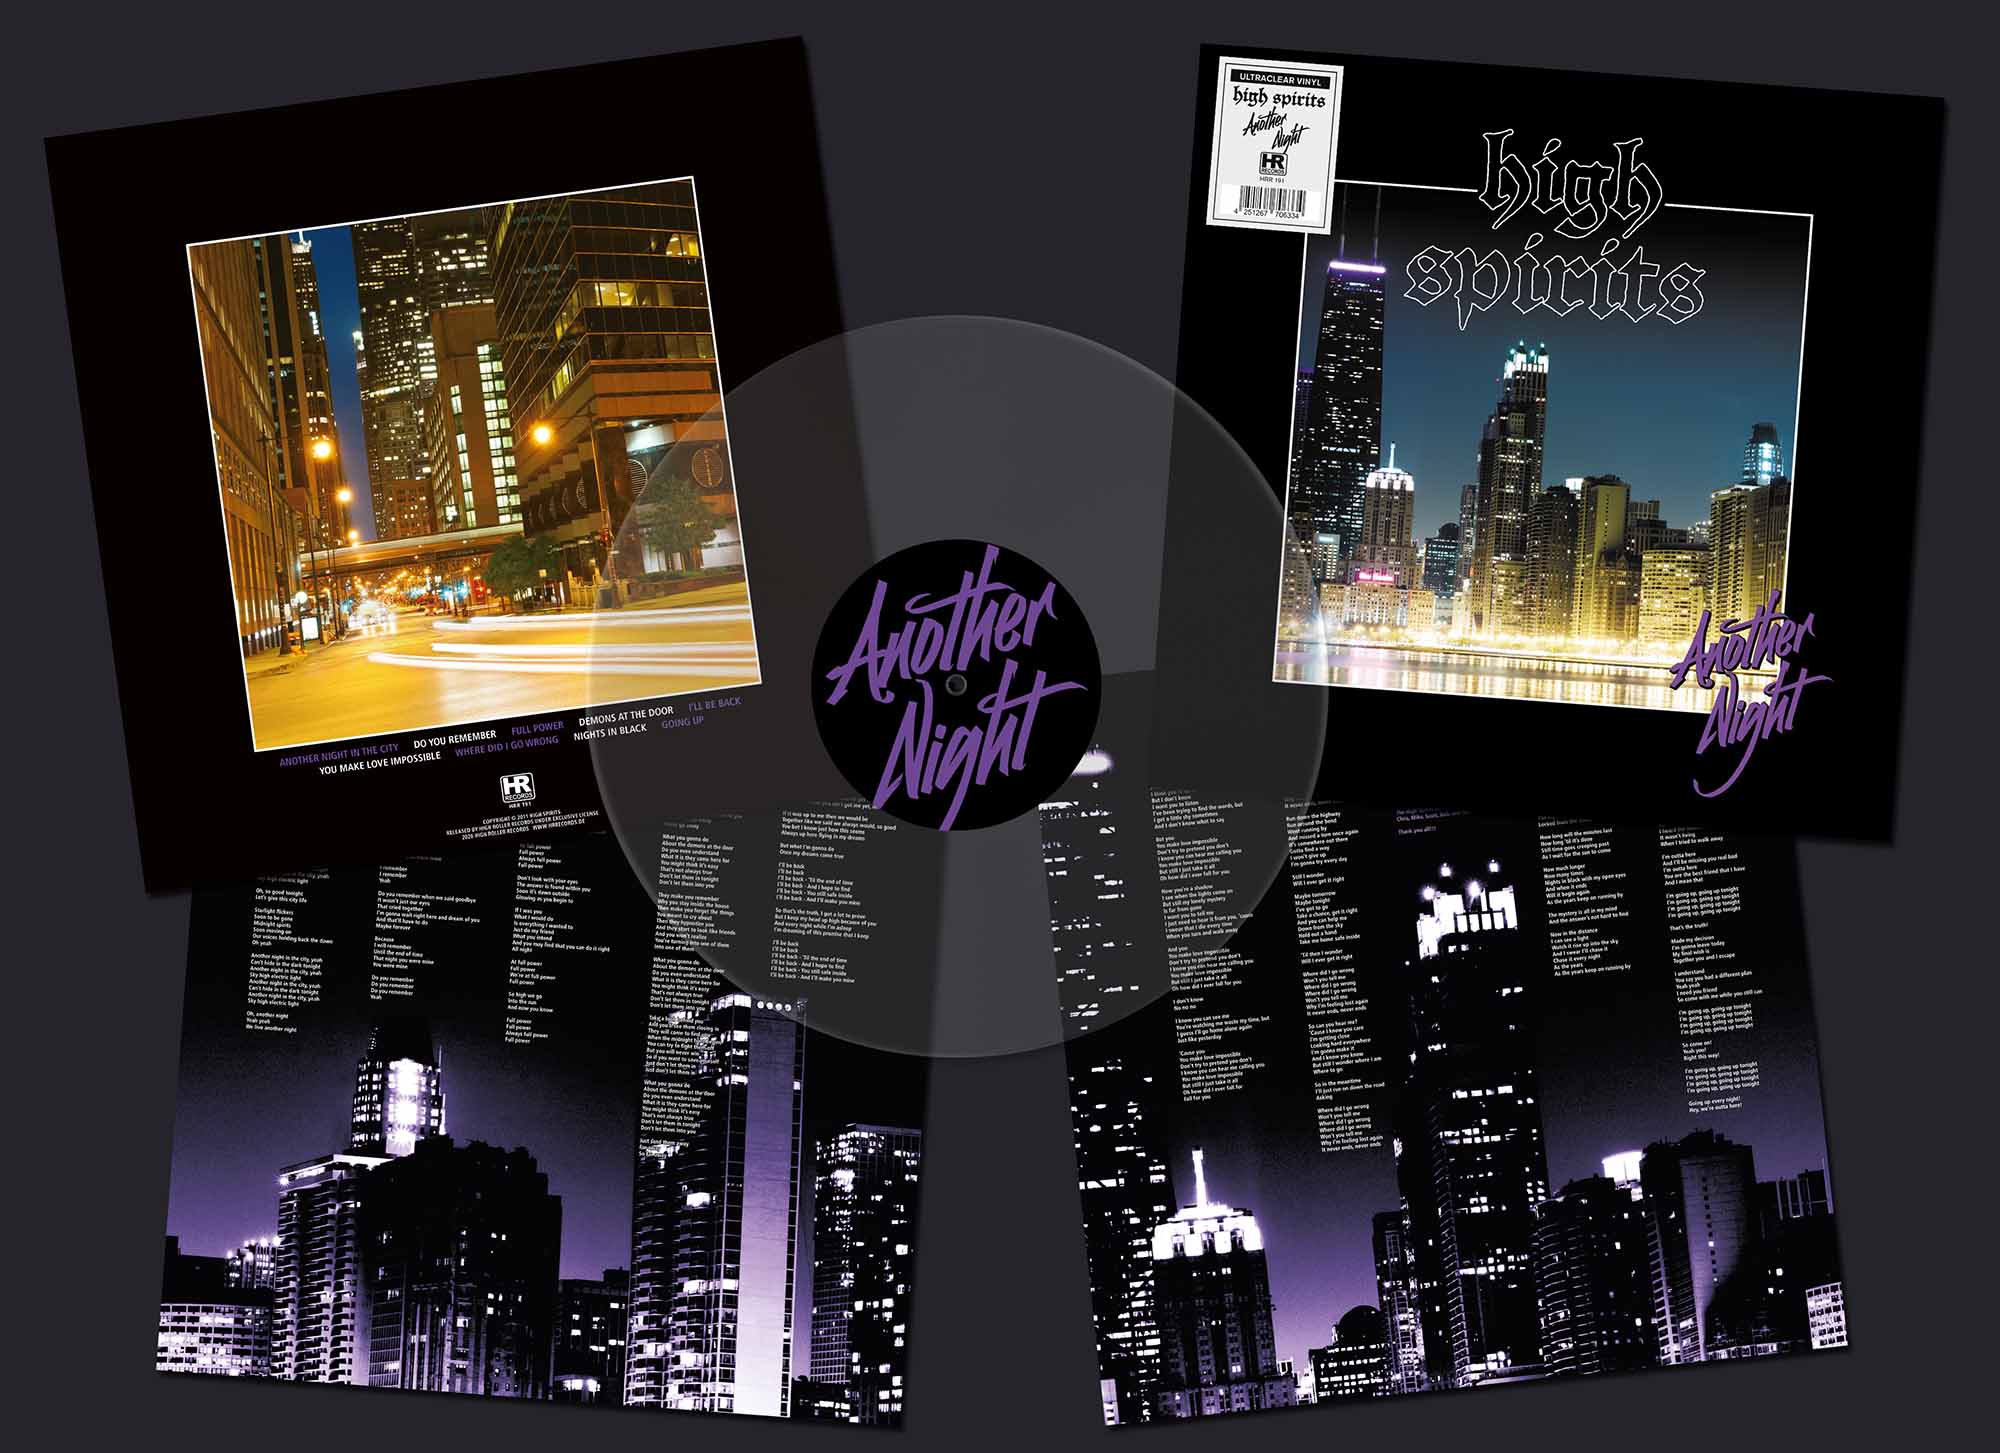 HIGH SPIRITS - Another Night  LP